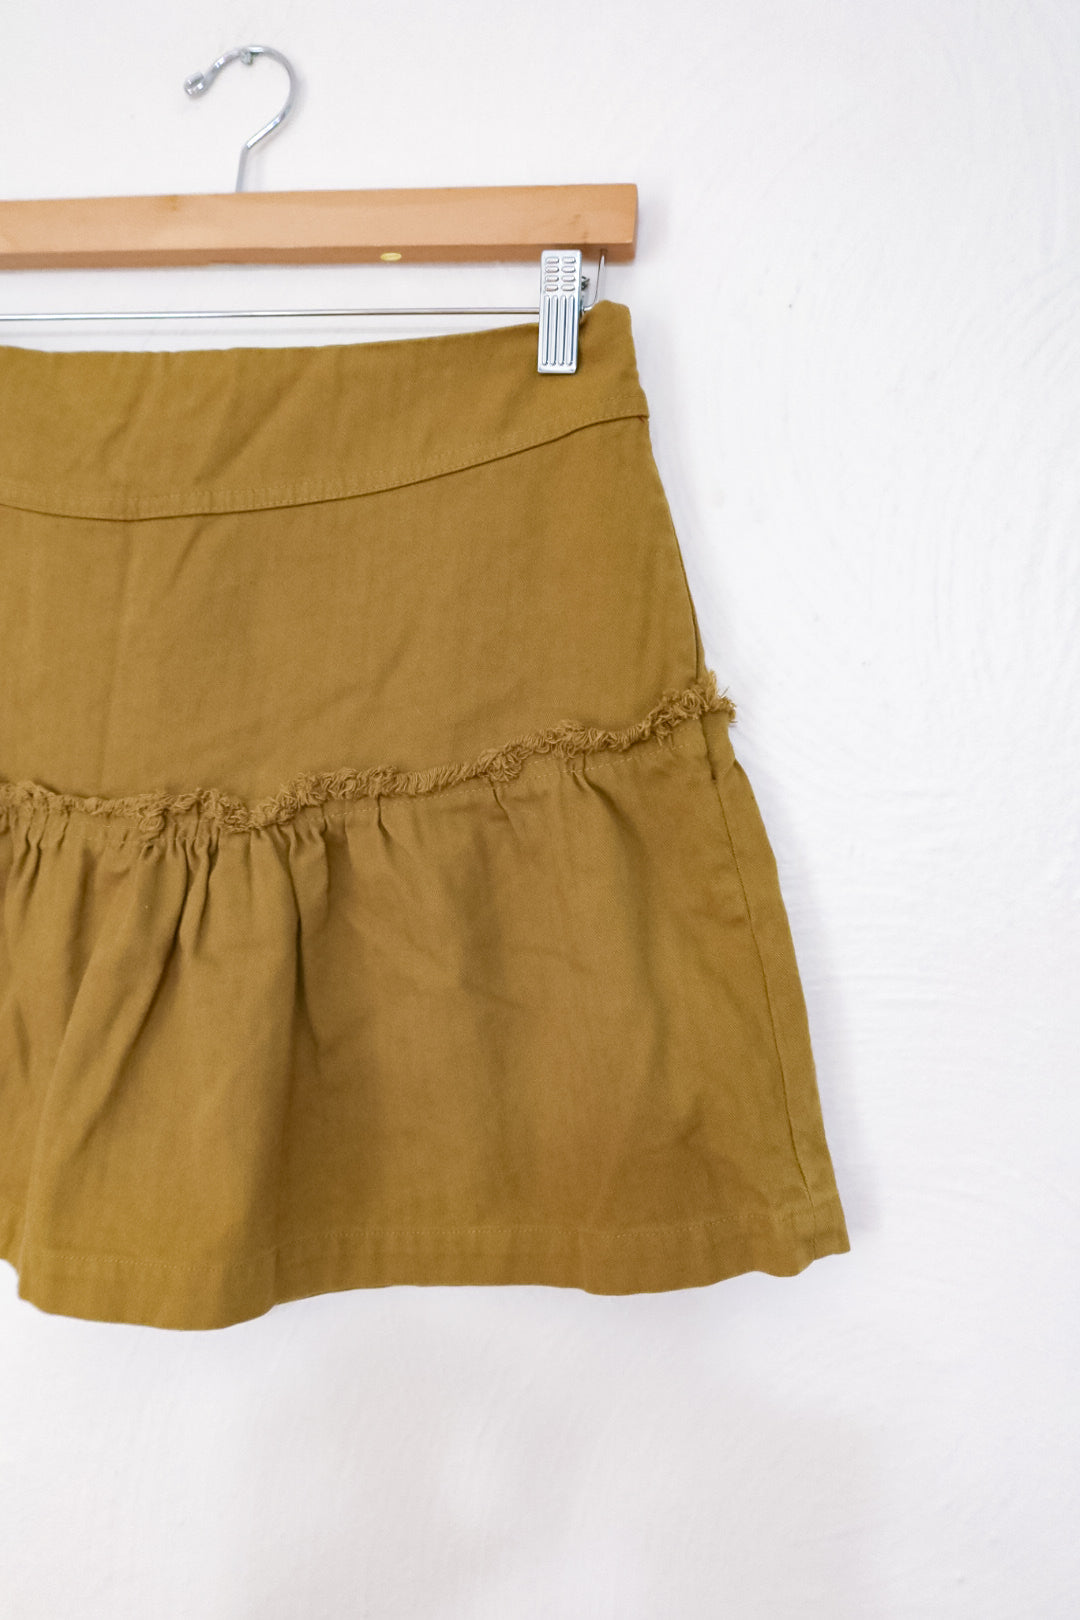 Free People Lace Up Mini Skirt (12)